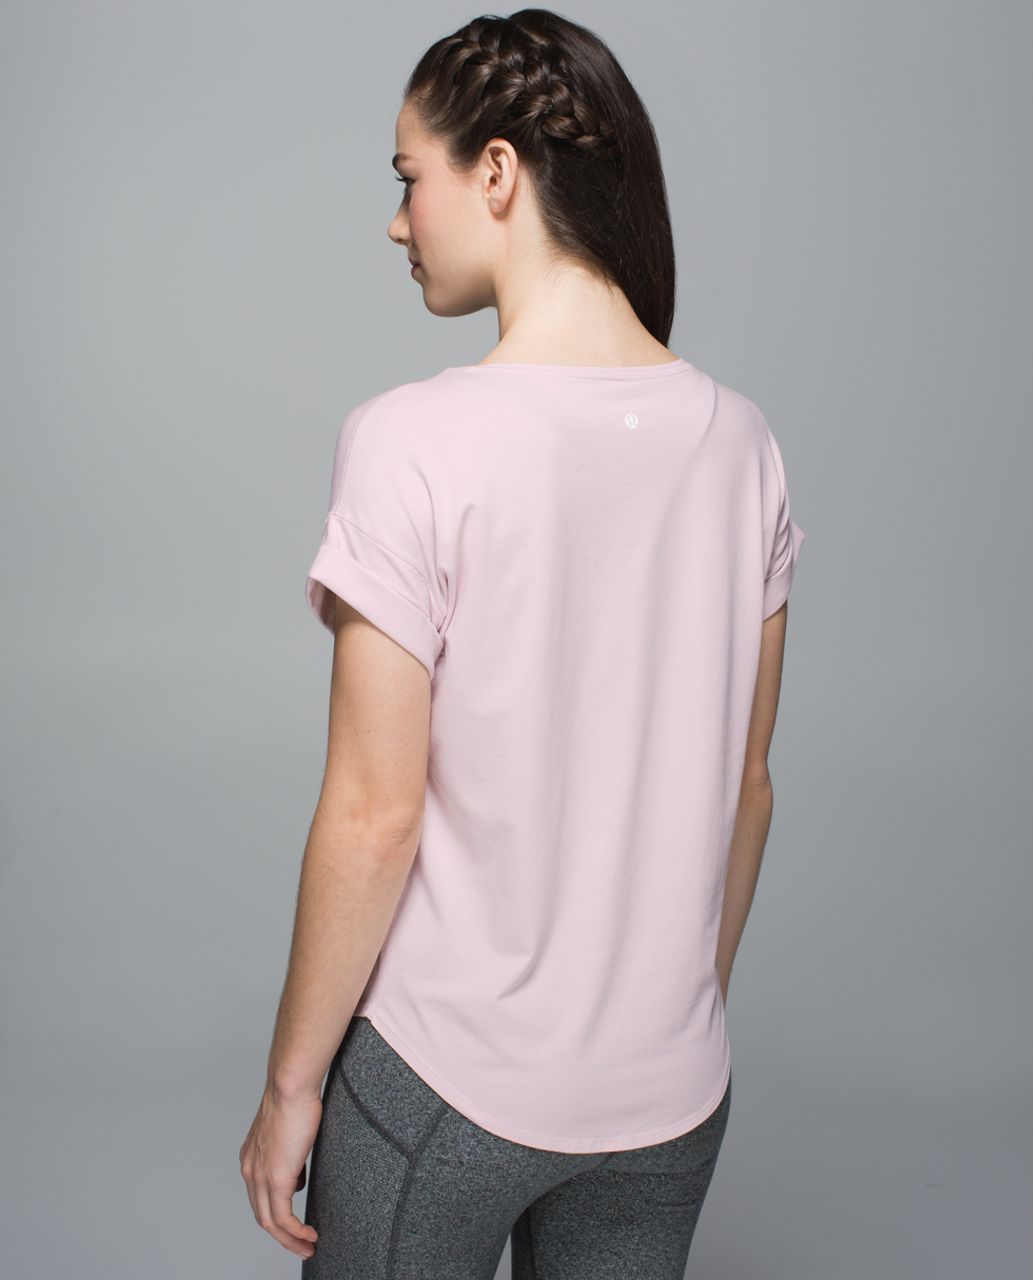 Lululemon Weekend Short Sleeve - Neutral Blush